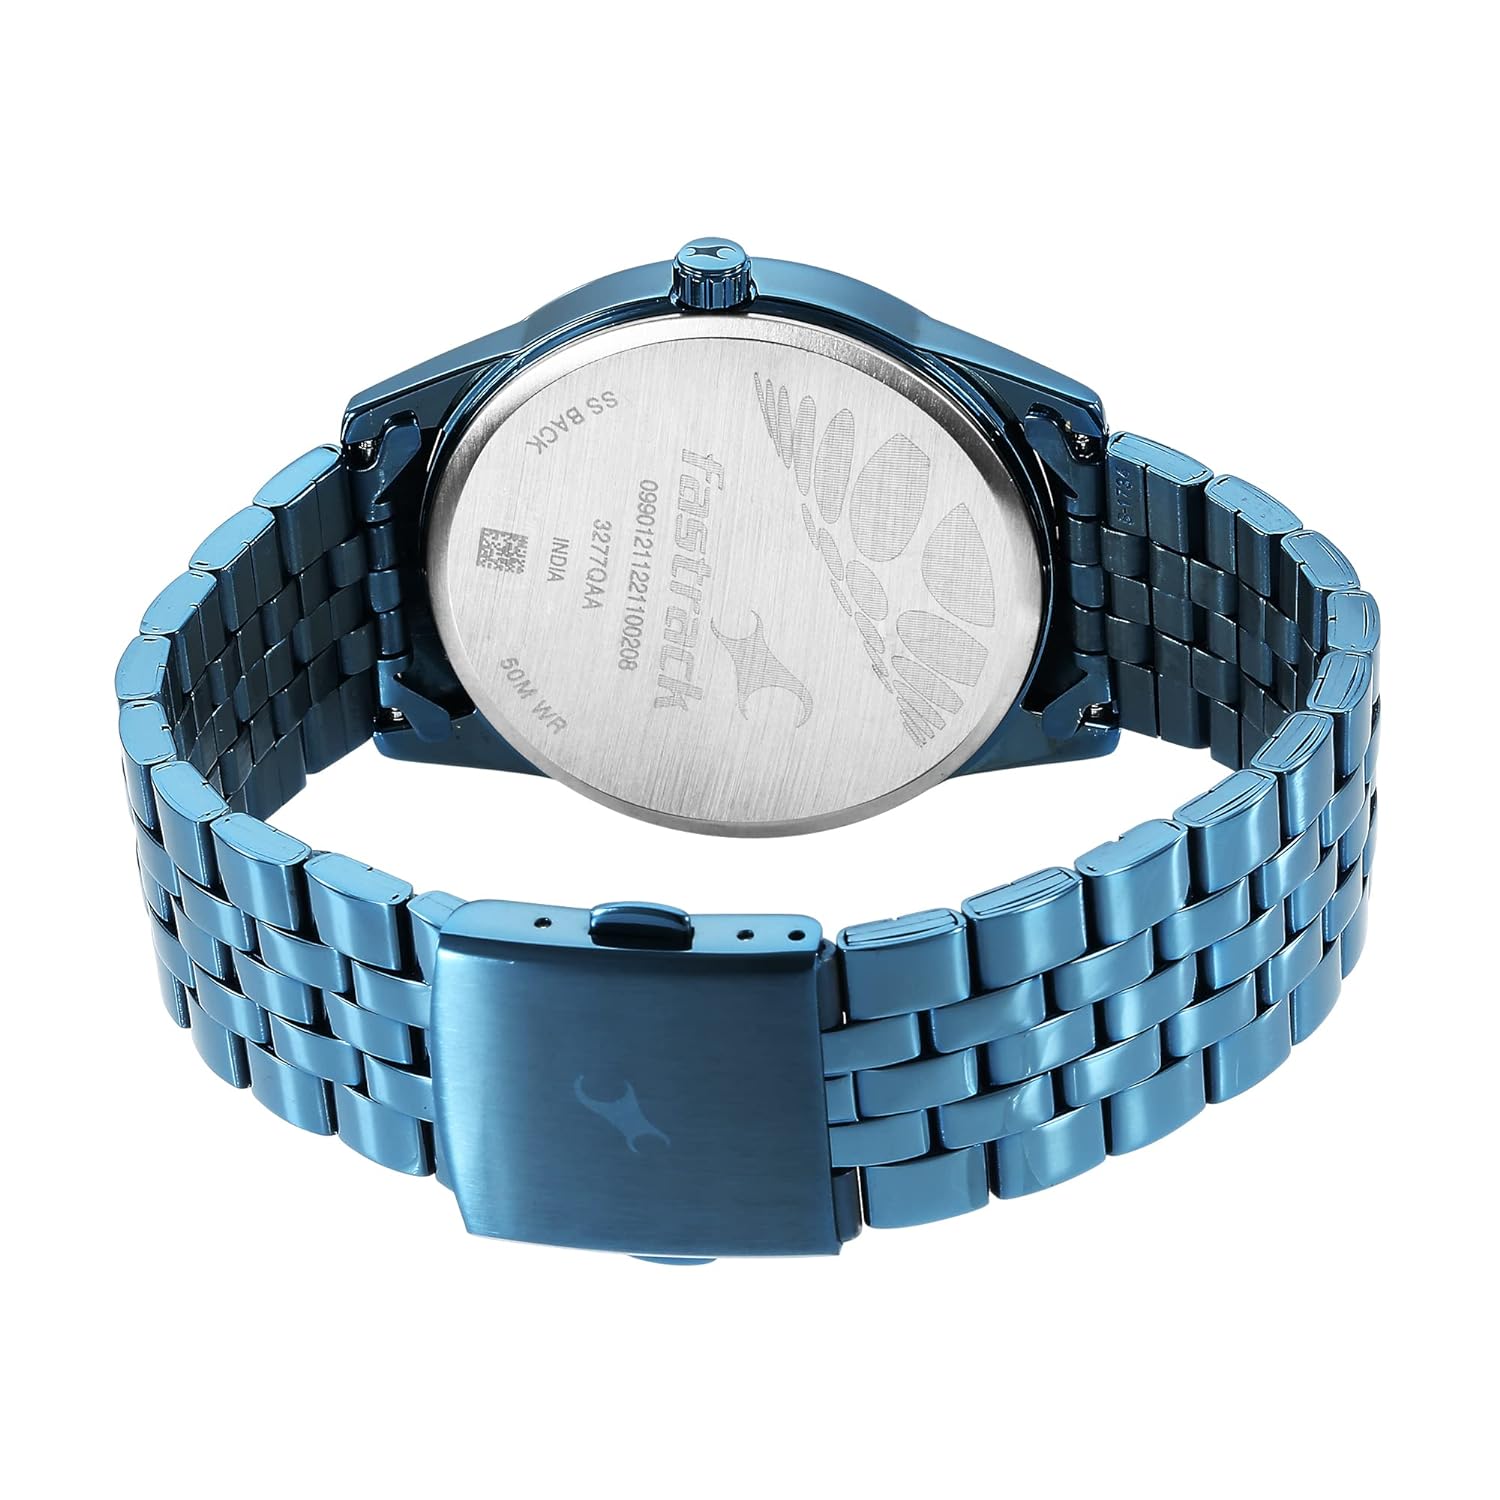 Buy hala LED 1017 Digital Watch for Boys (Green) at Amazon.in